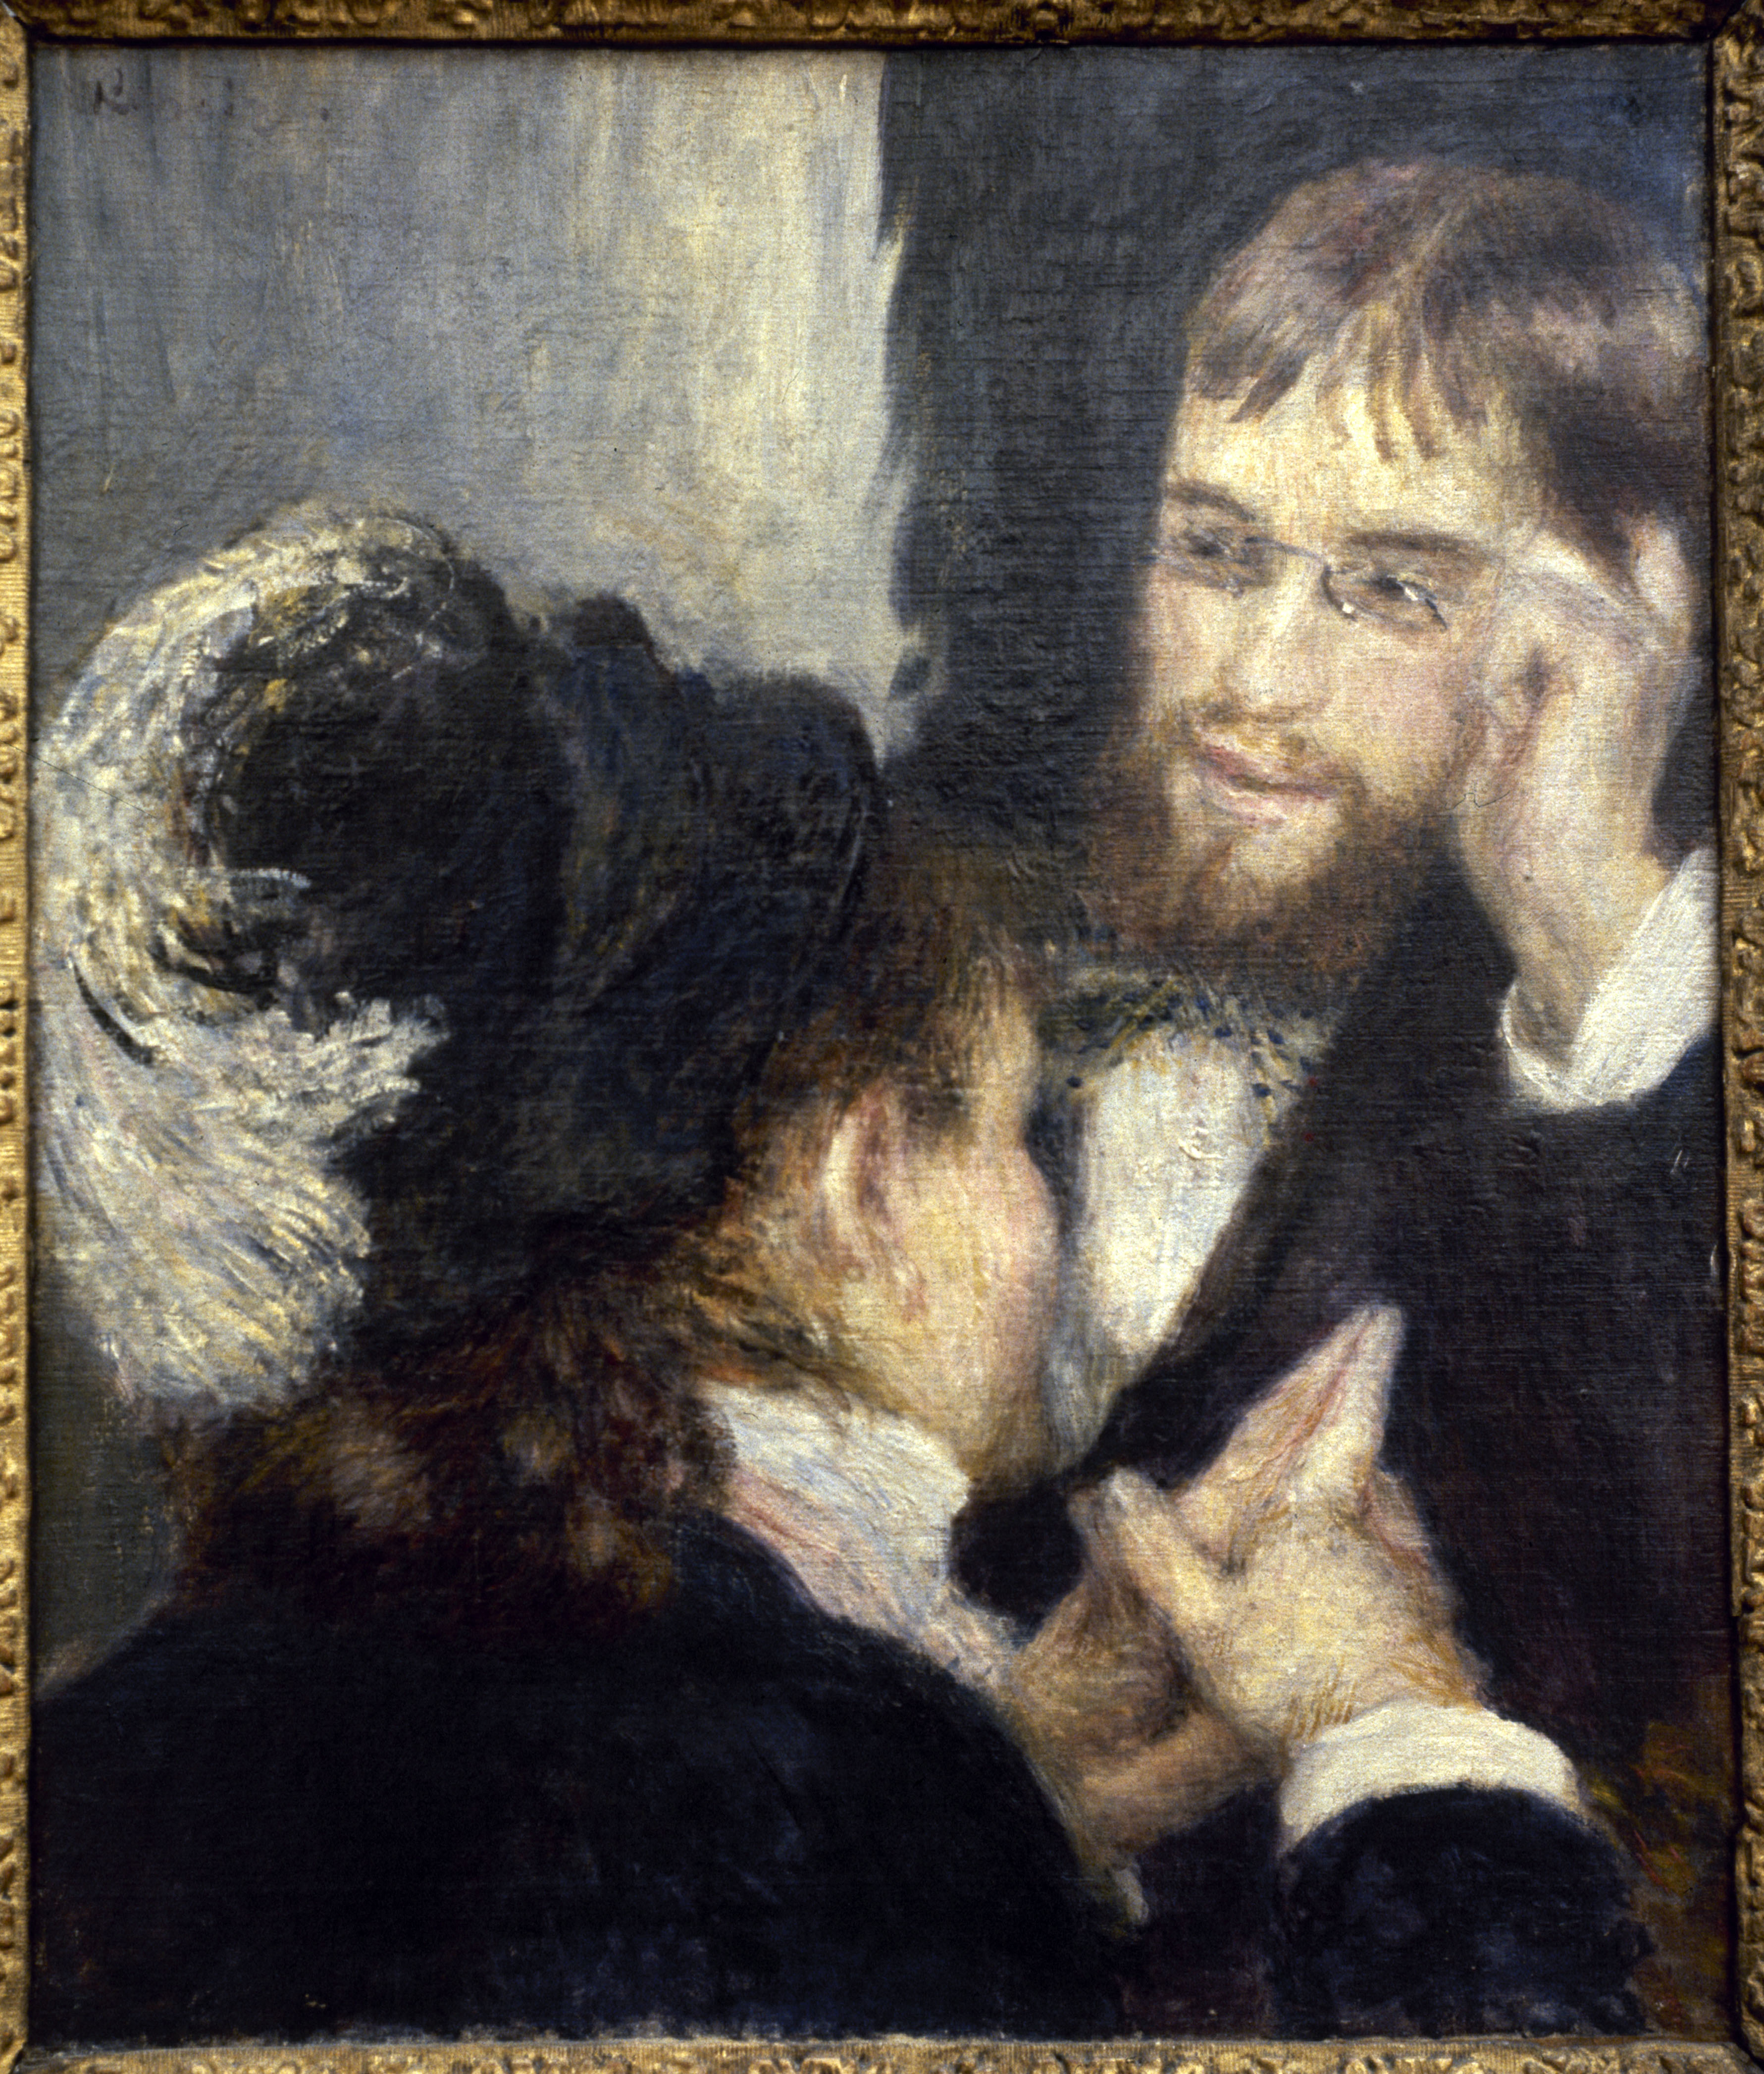 La conversazione, 1878. Olio su tela, 43.18 x 38.1 cm. Nationalmuseum, Stoccolma. Credito: © Roger-Viollet/contrasto